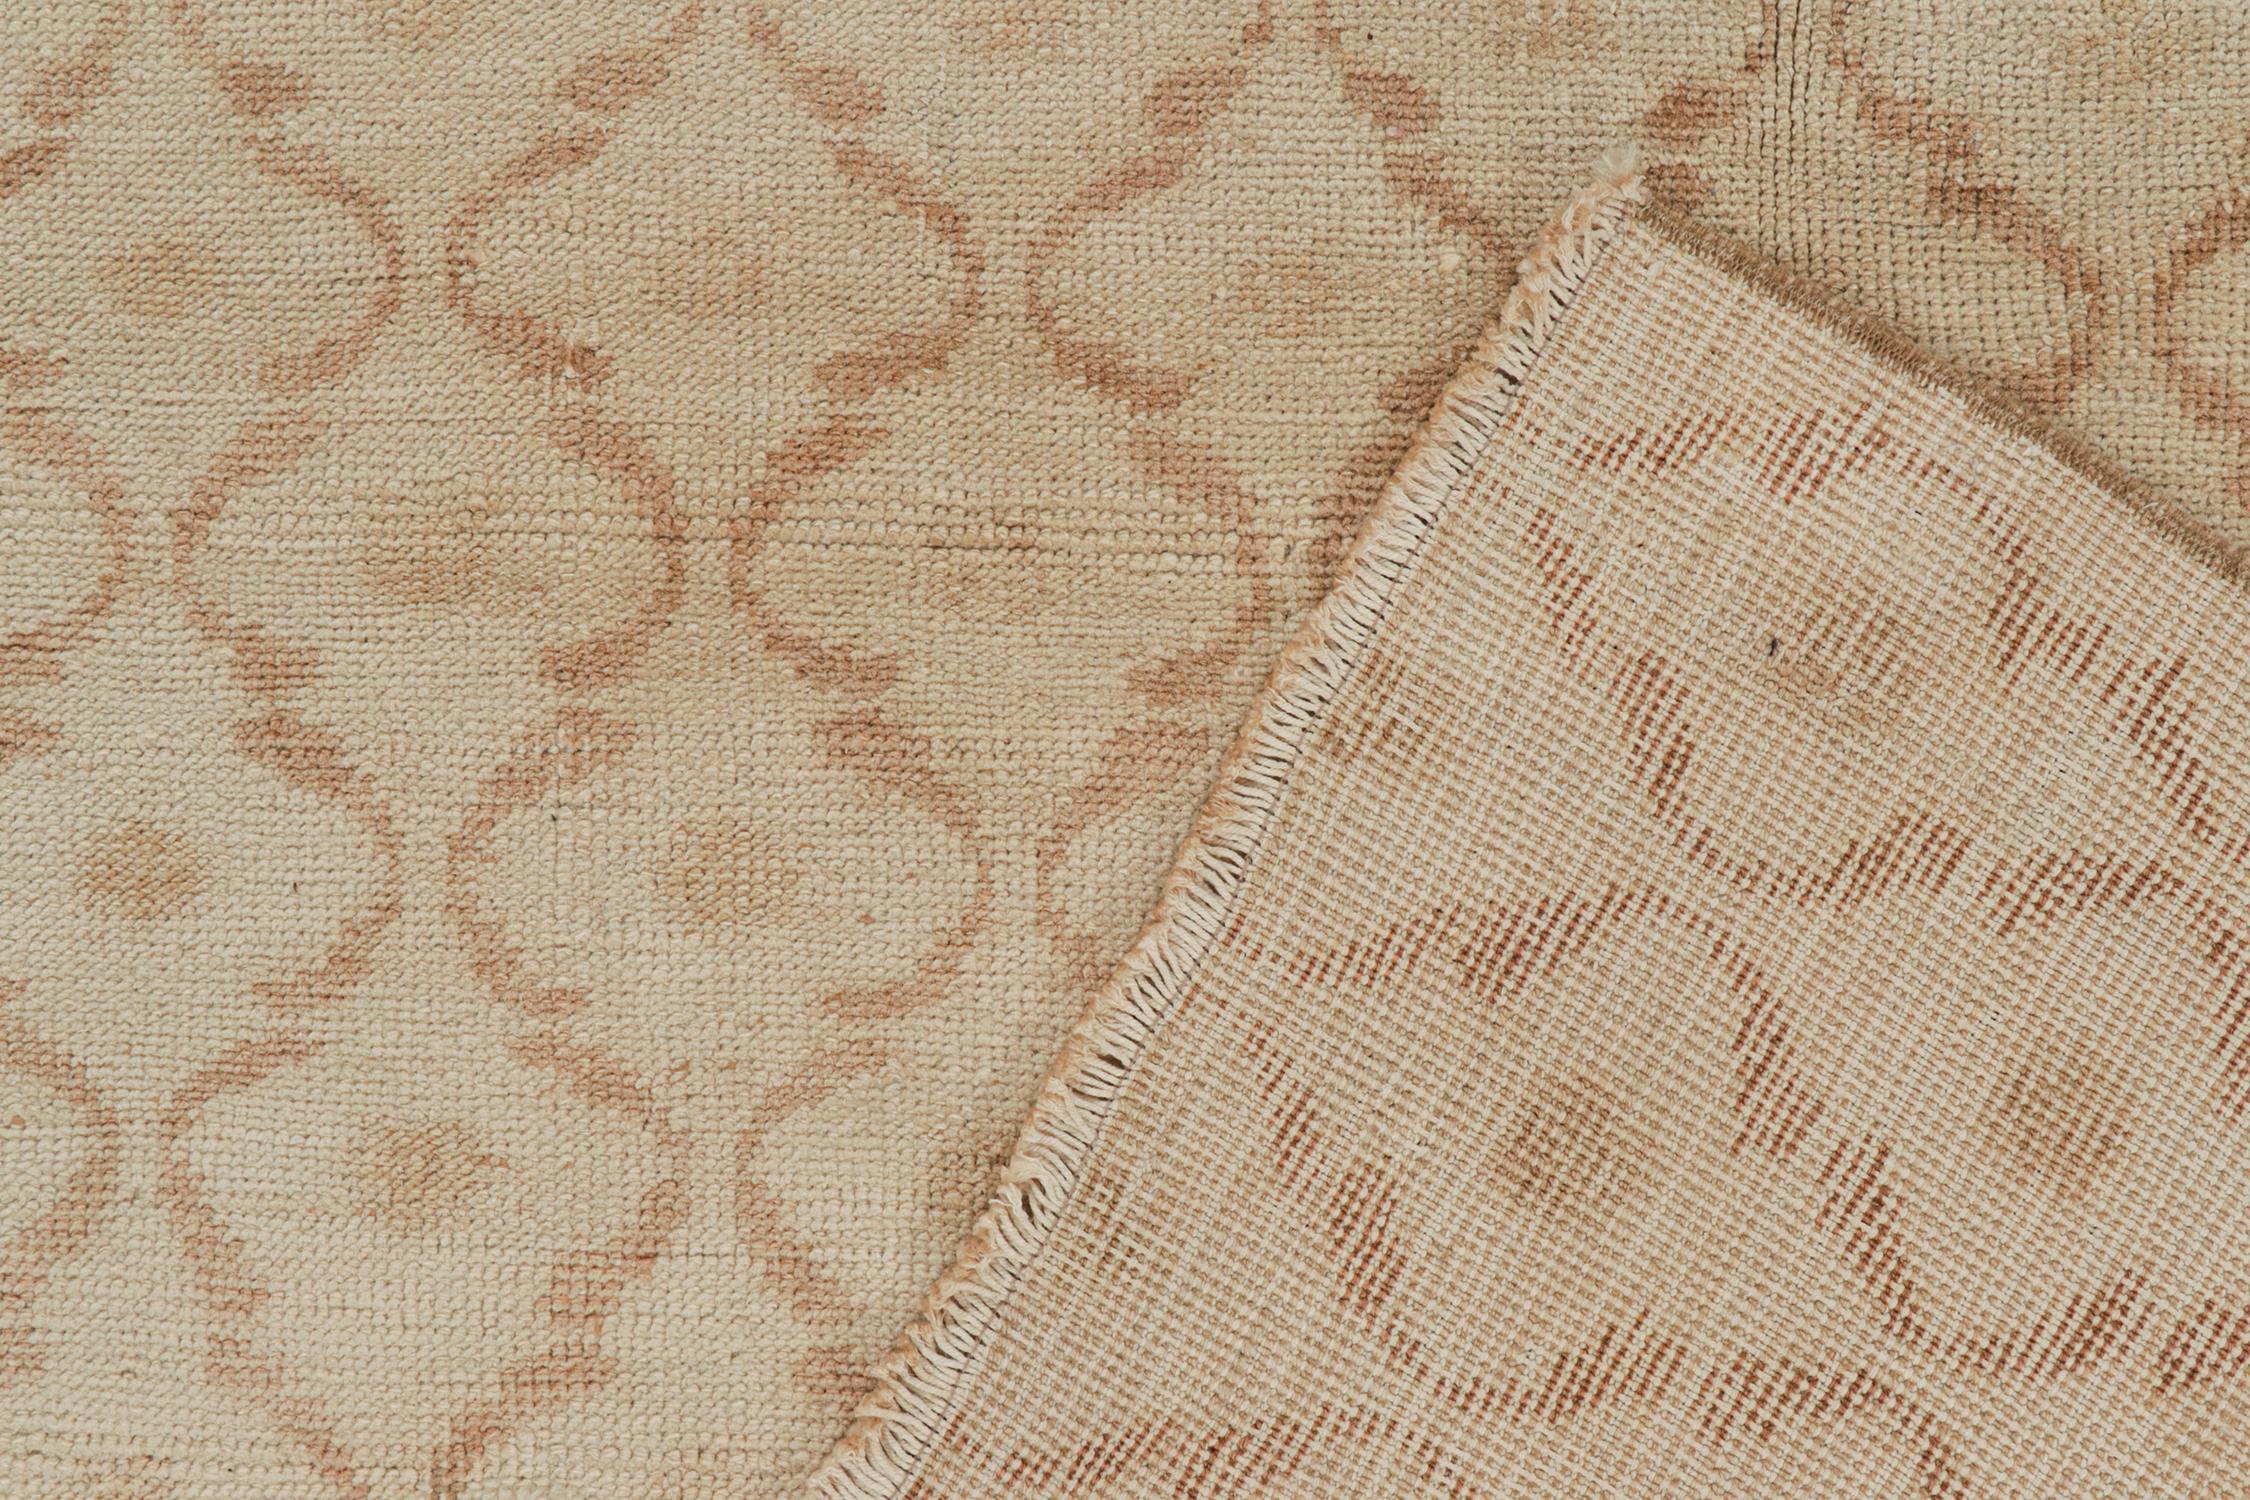 Wool Vintage Zeki Müren Runner in Beige with Brown Lattice Pattern by Rug & Kilim For Sale